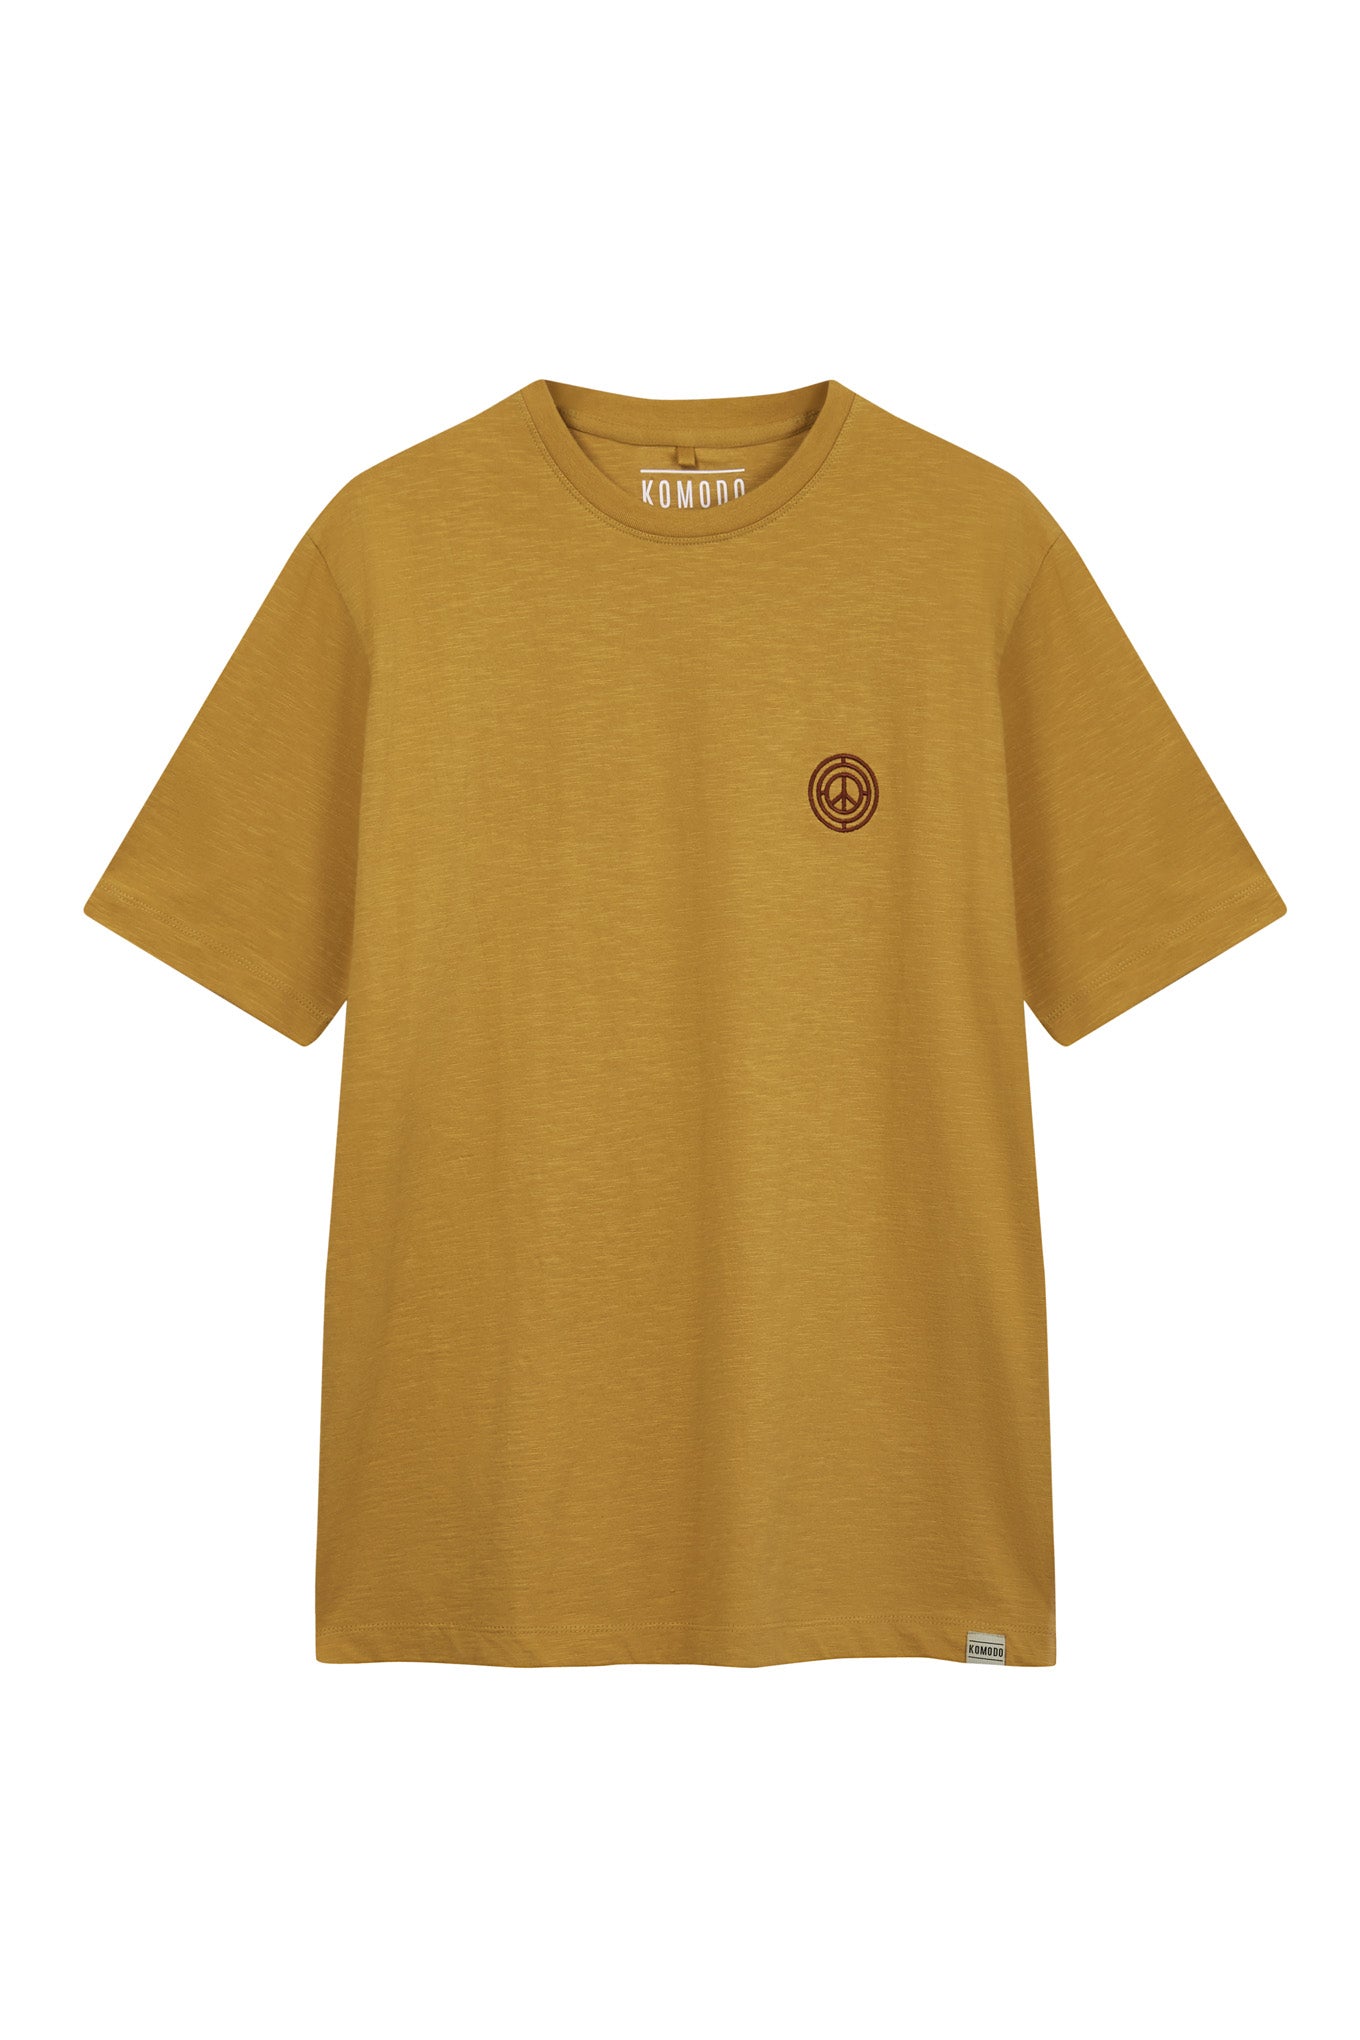 T-shirt jaune KIN en coton biologique de Komodo